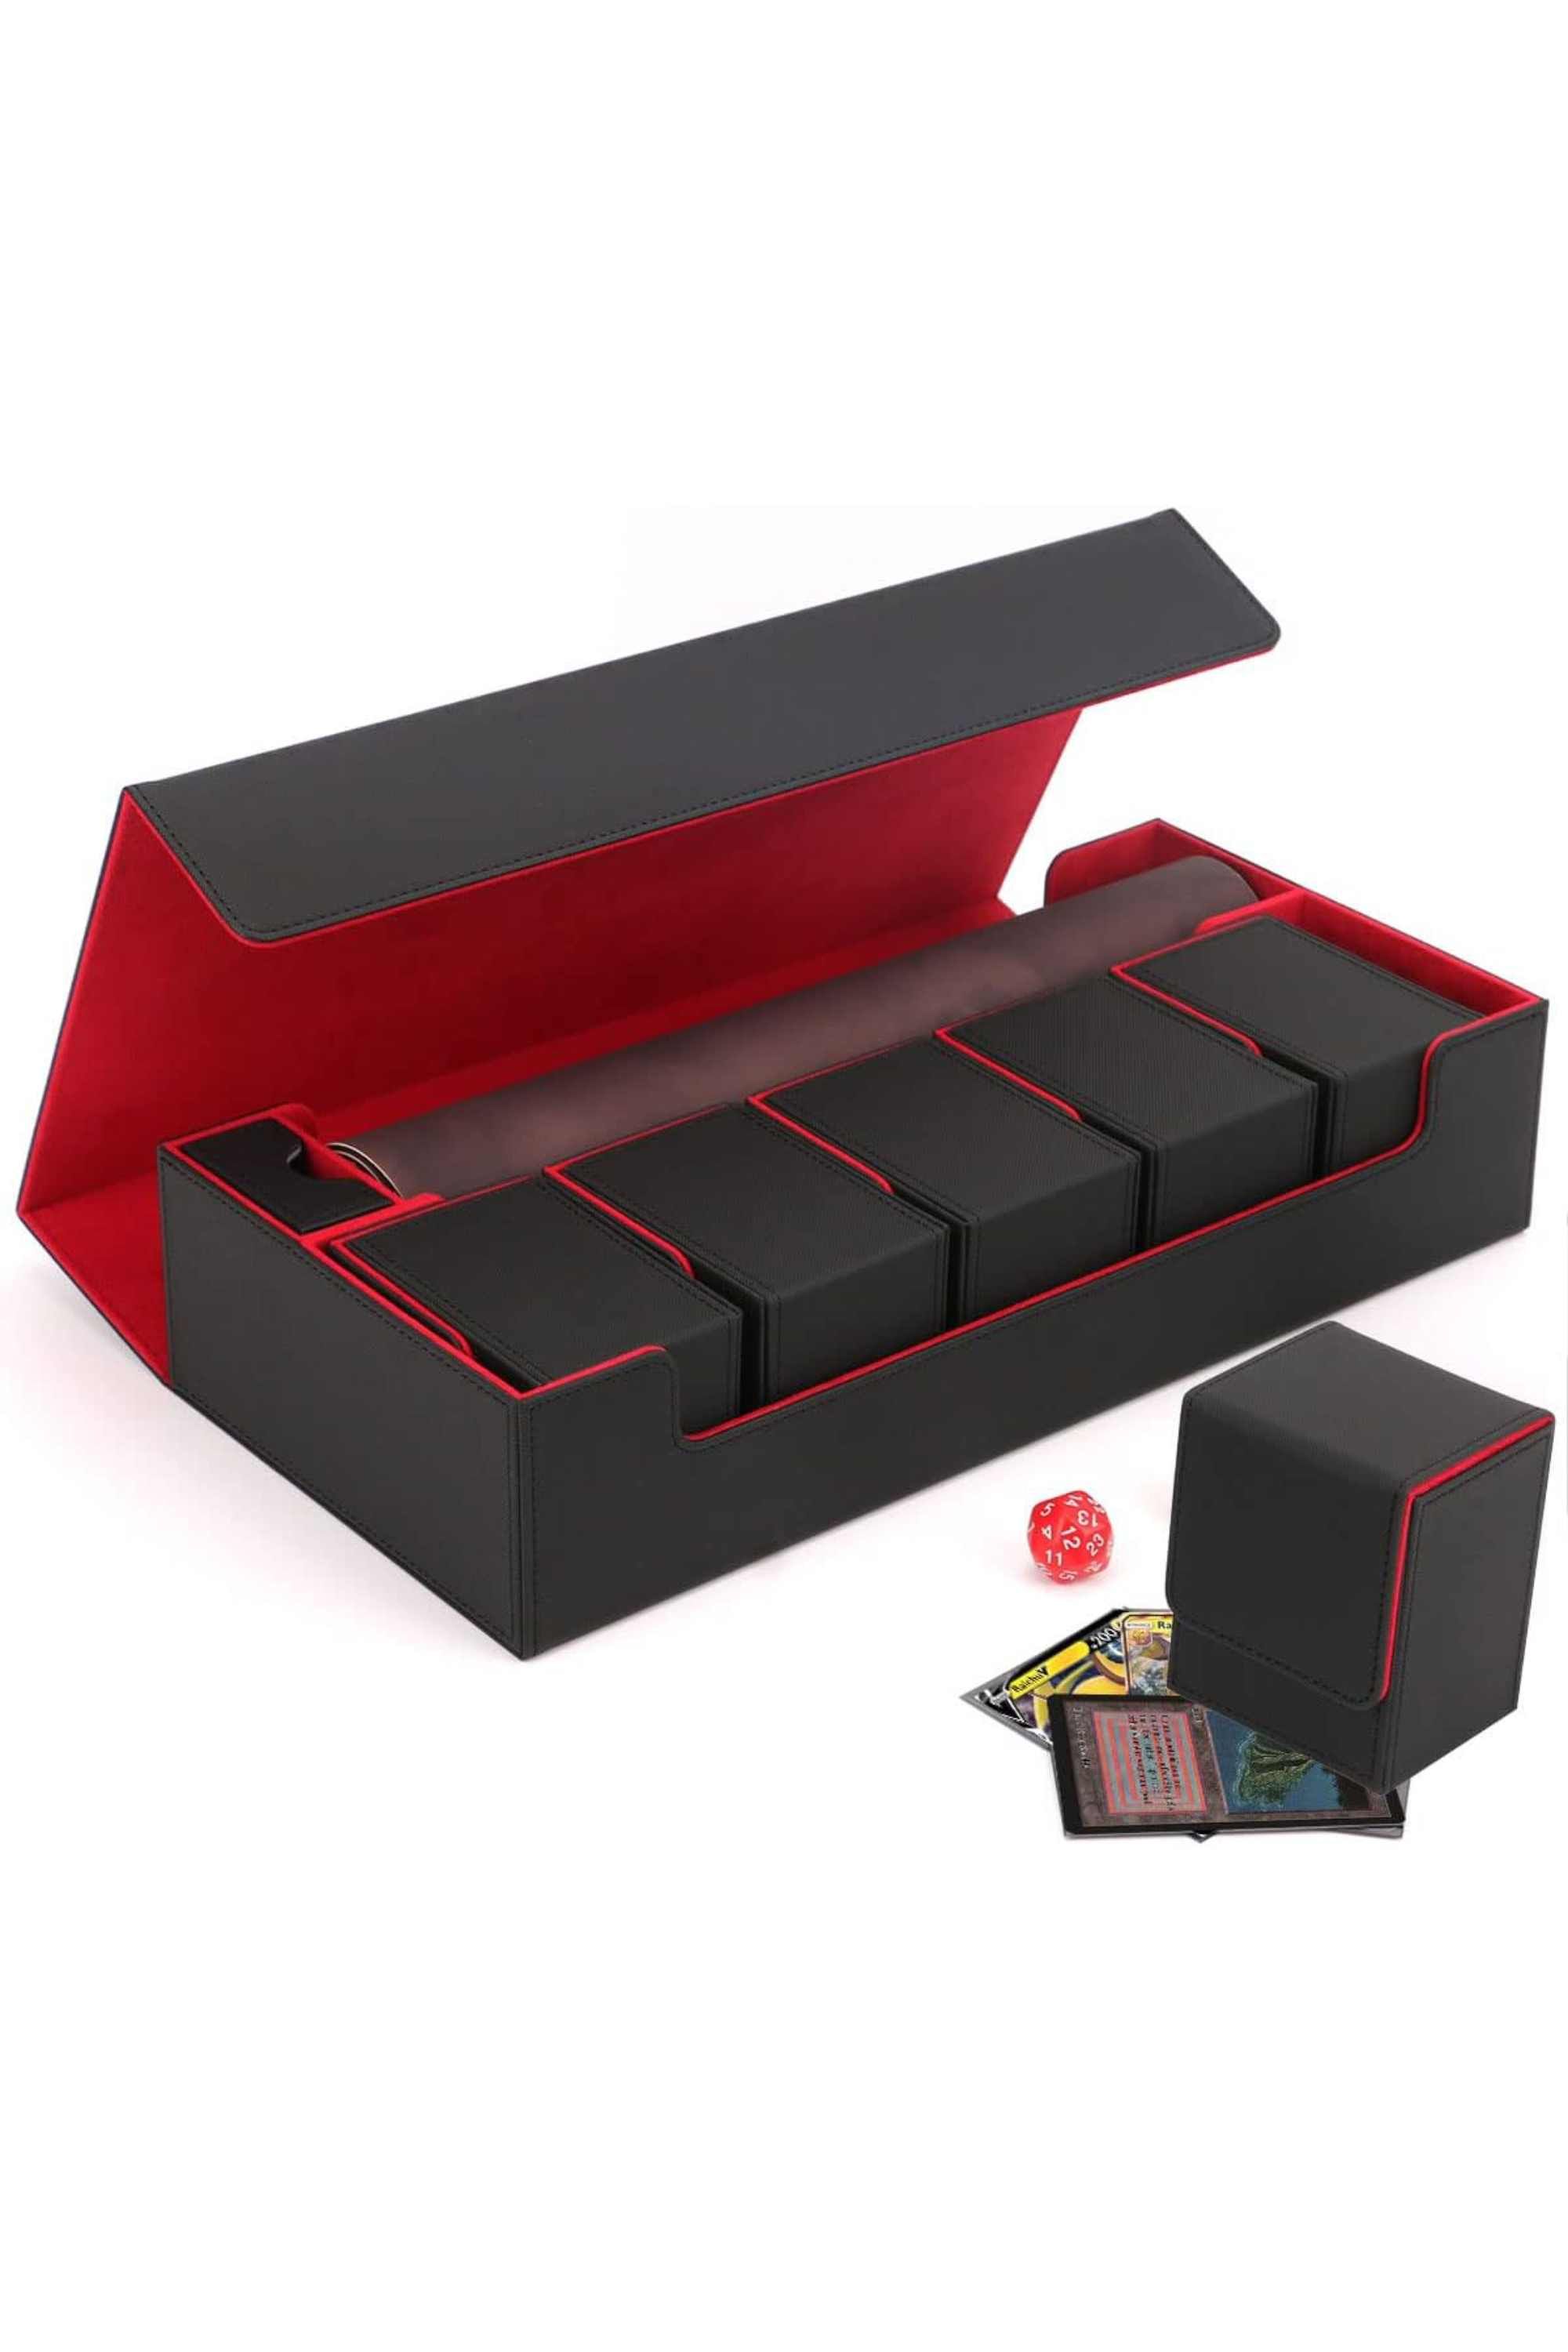 Scimi Premium Trading Card Storage Box TCG Deck Case